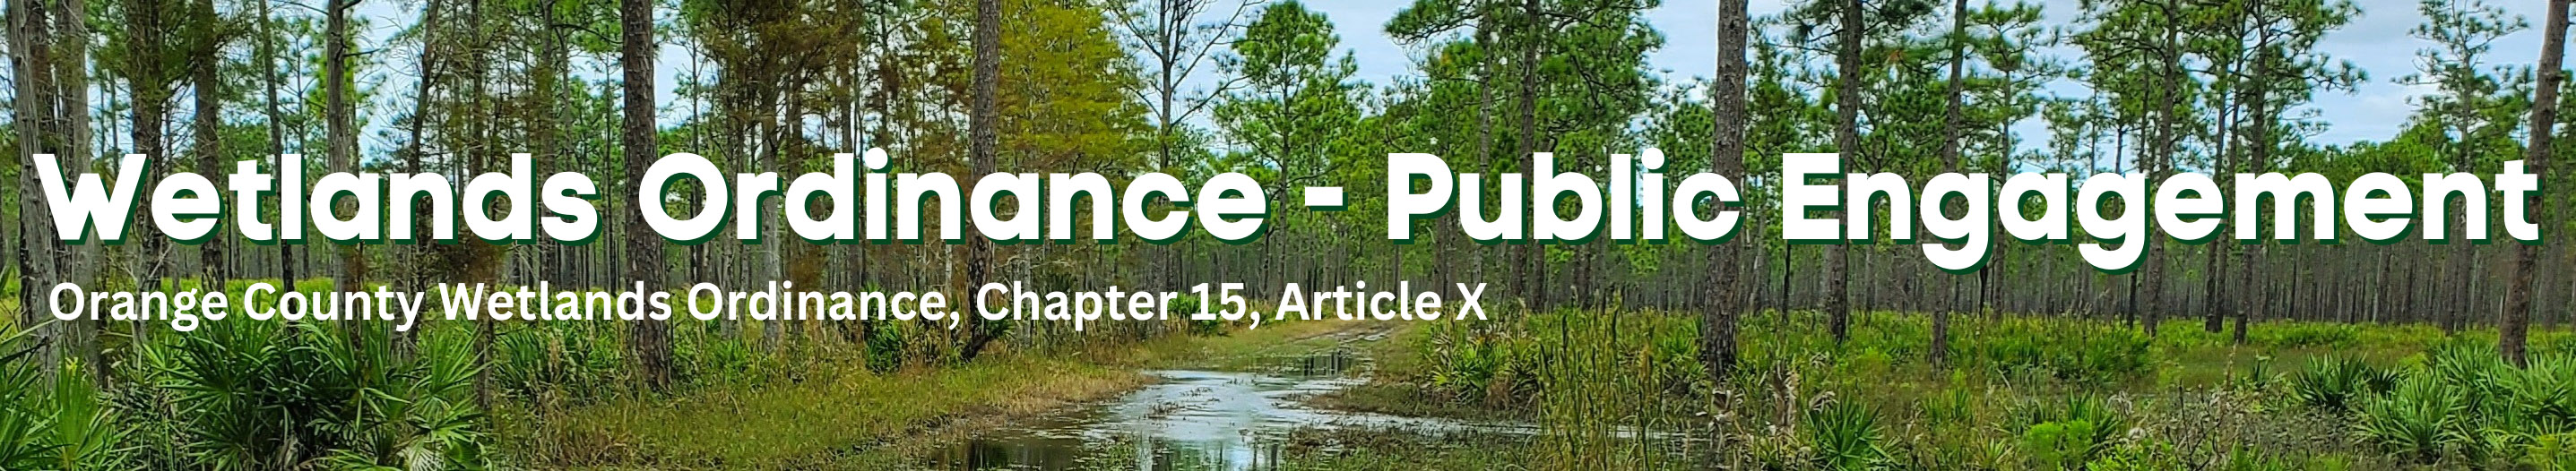 Welands Ordiance Public Engagement - Orange County Wetlands Ordinance, Chapter 15 Article X